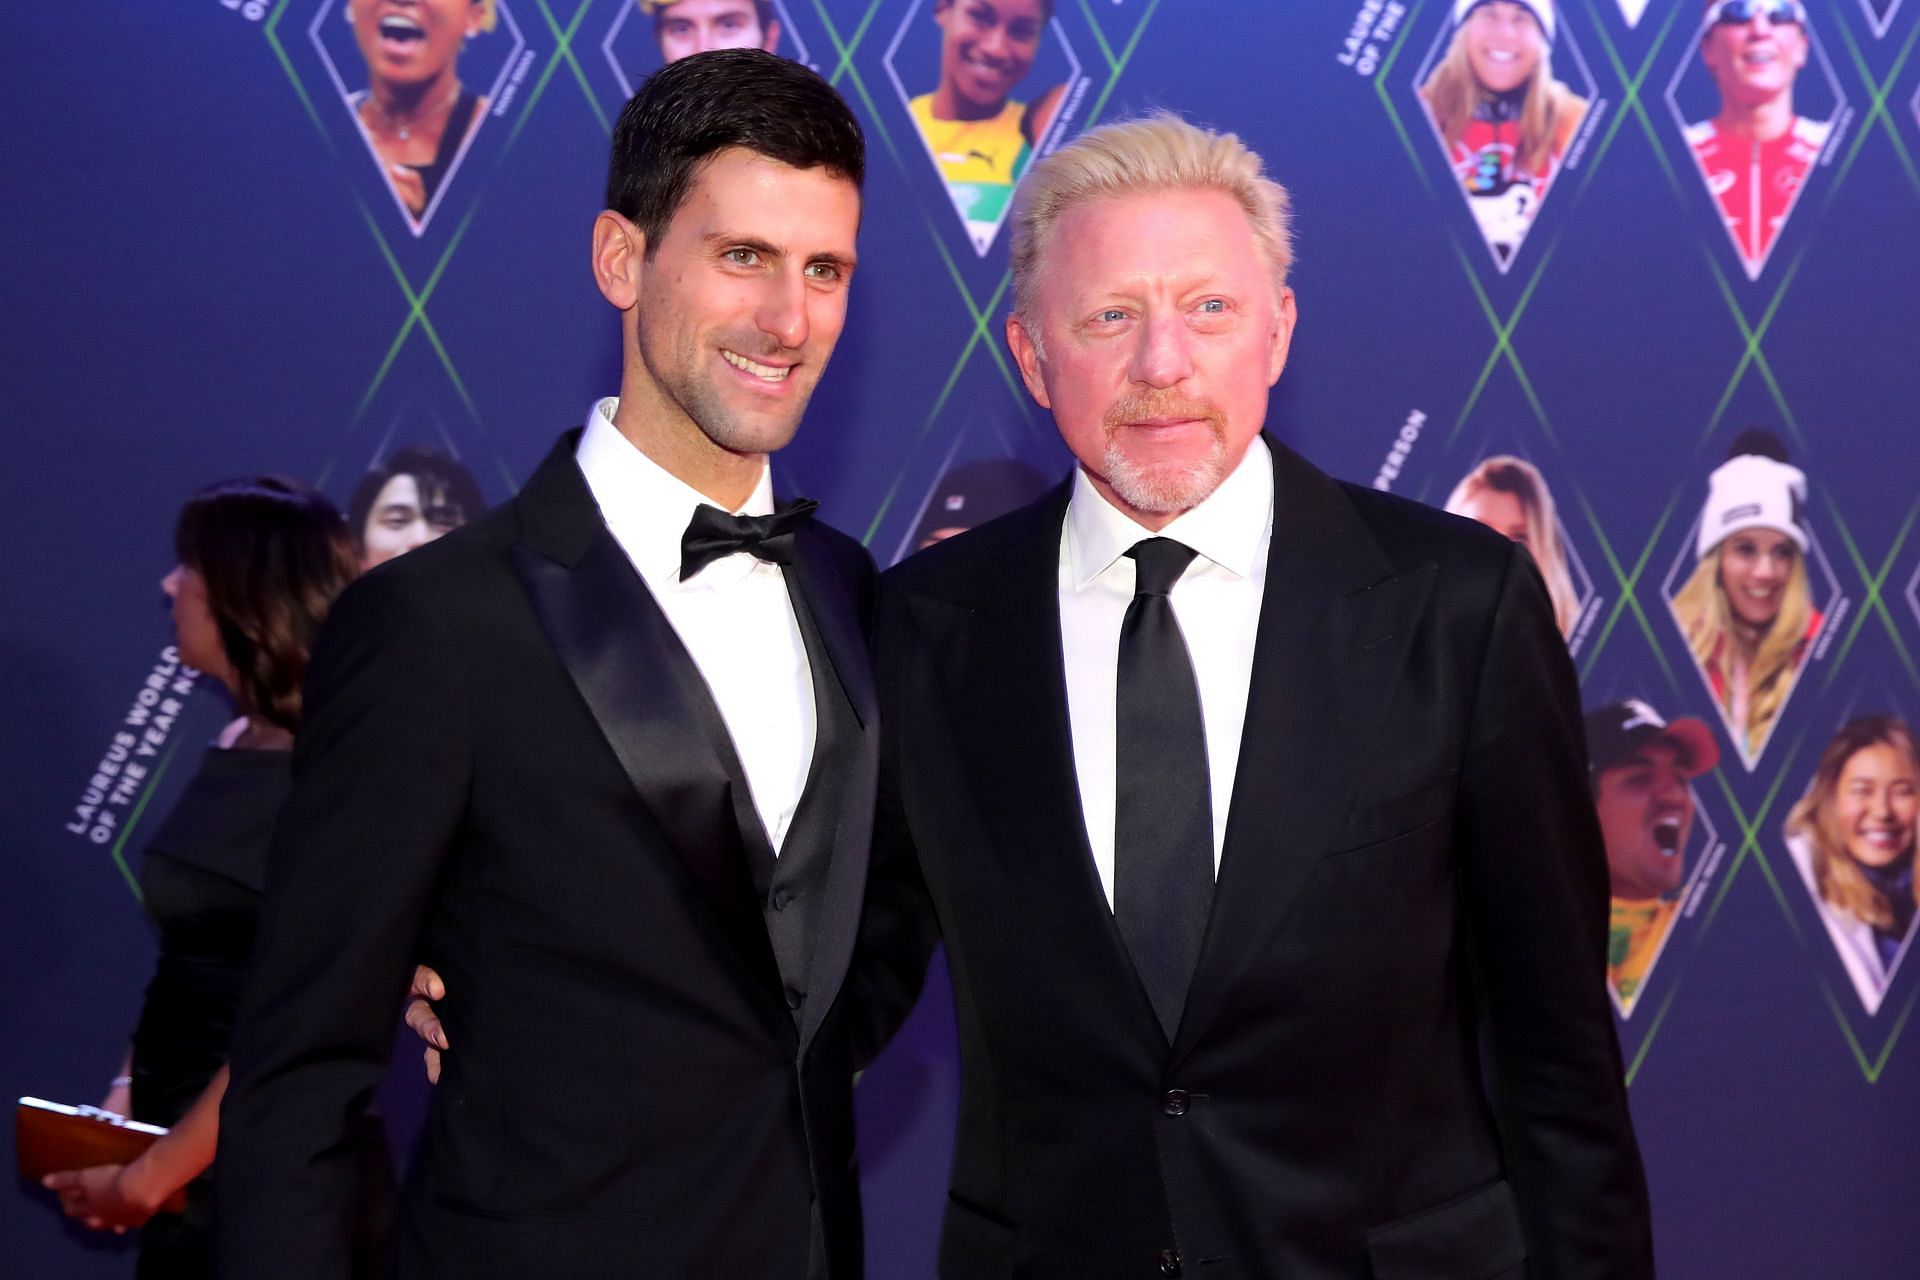 “Happy Birthday Schatzi” - Novak Djokovic's former coach and tennis legend Boris Becker wishes Serb on his 37th birthday